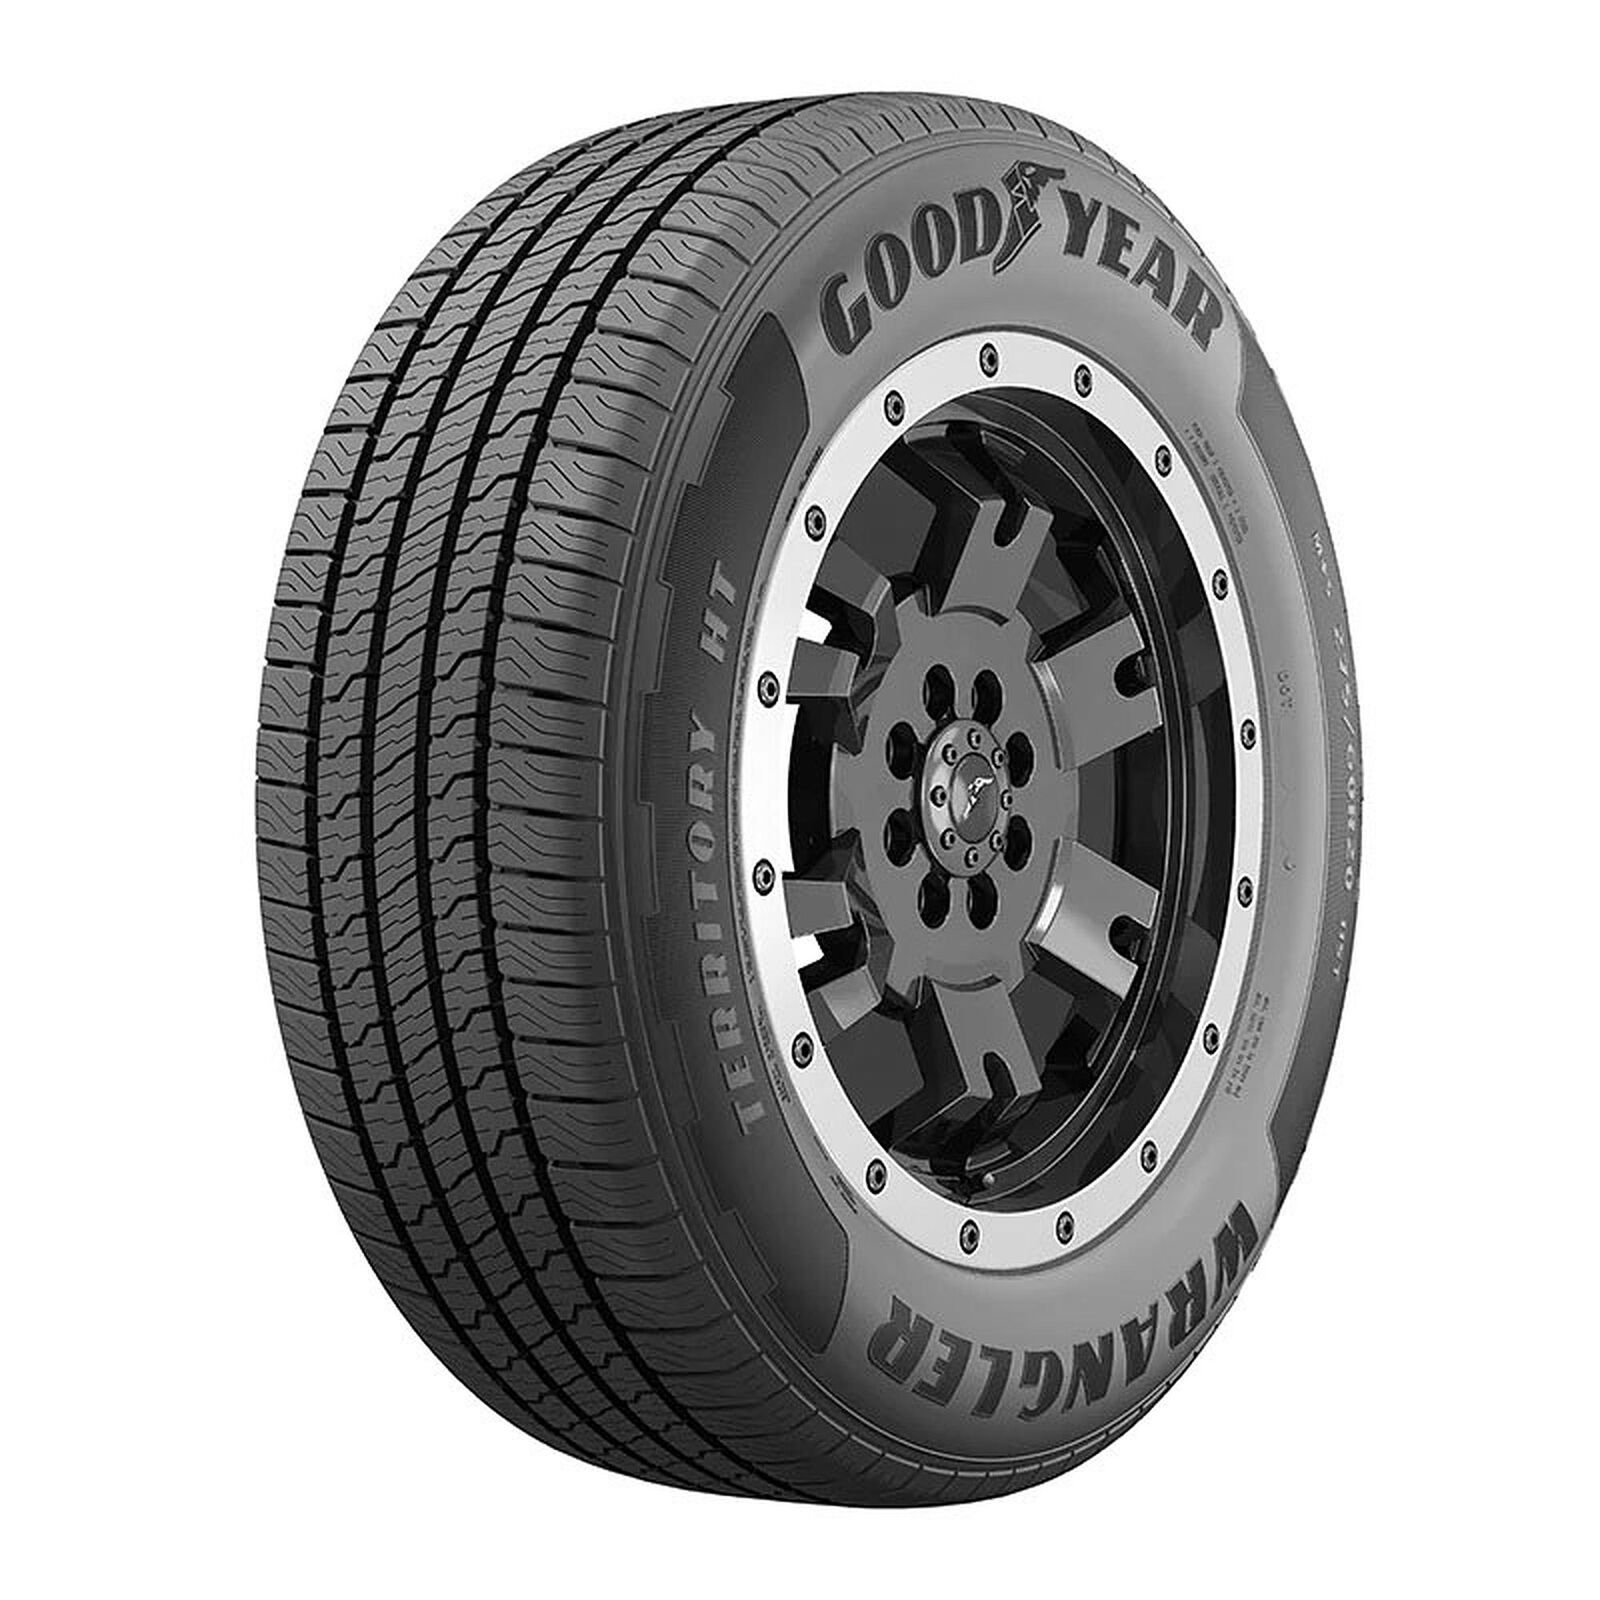 4 New Goodyear Wrangler Territory H/t  - 255x65r18 Tires 2556518 255 65 18